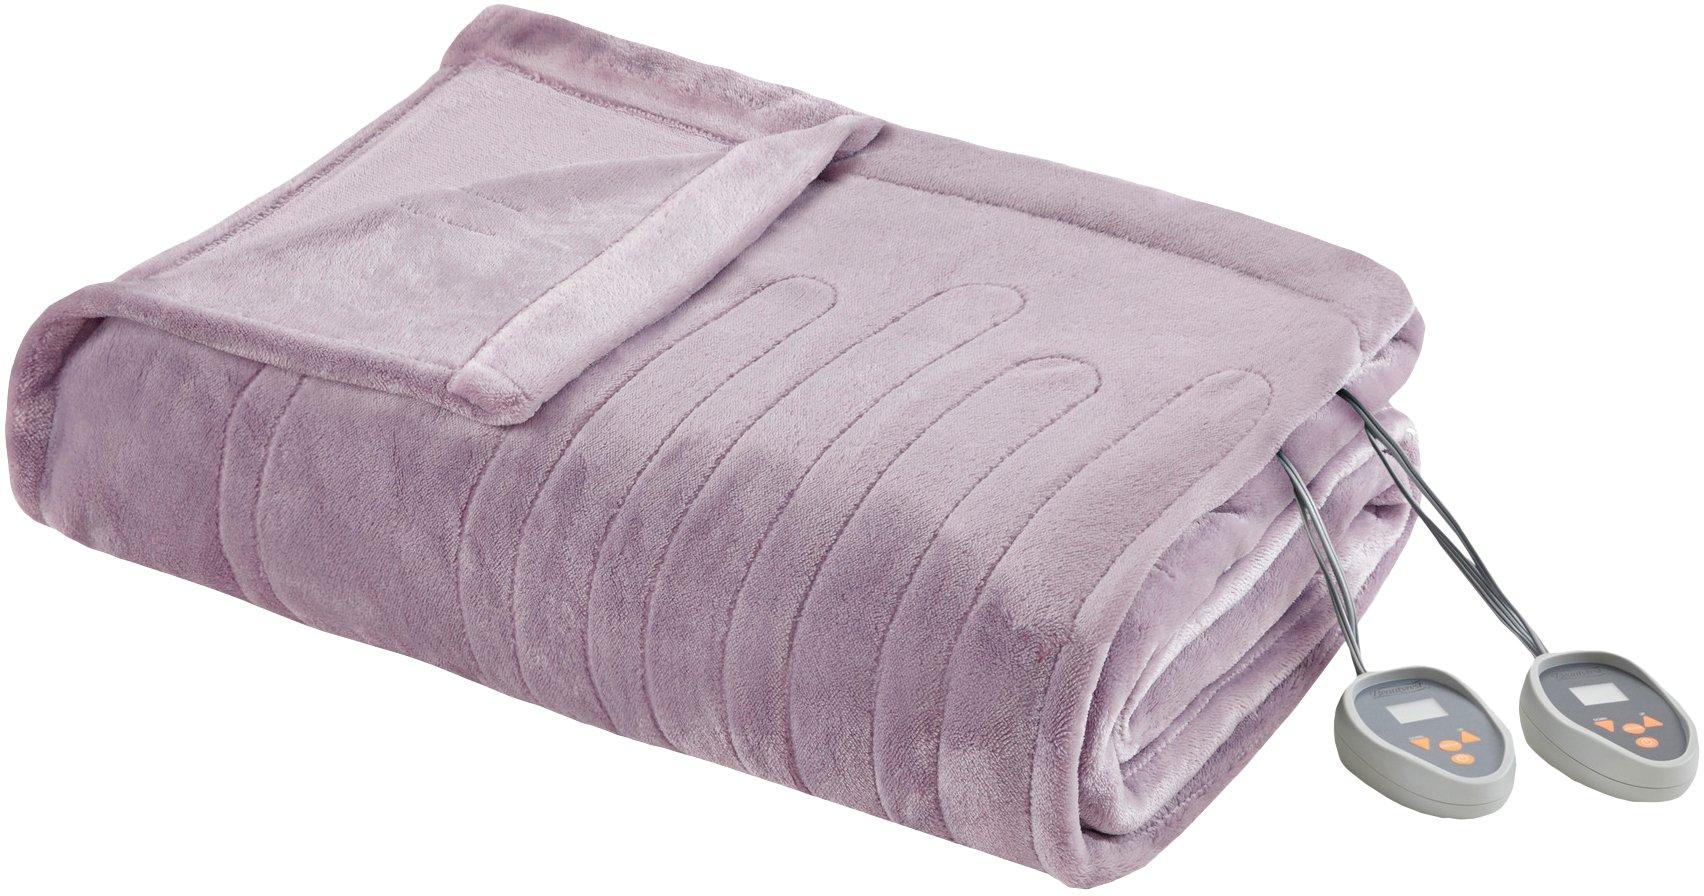 Heated Plush Blanket